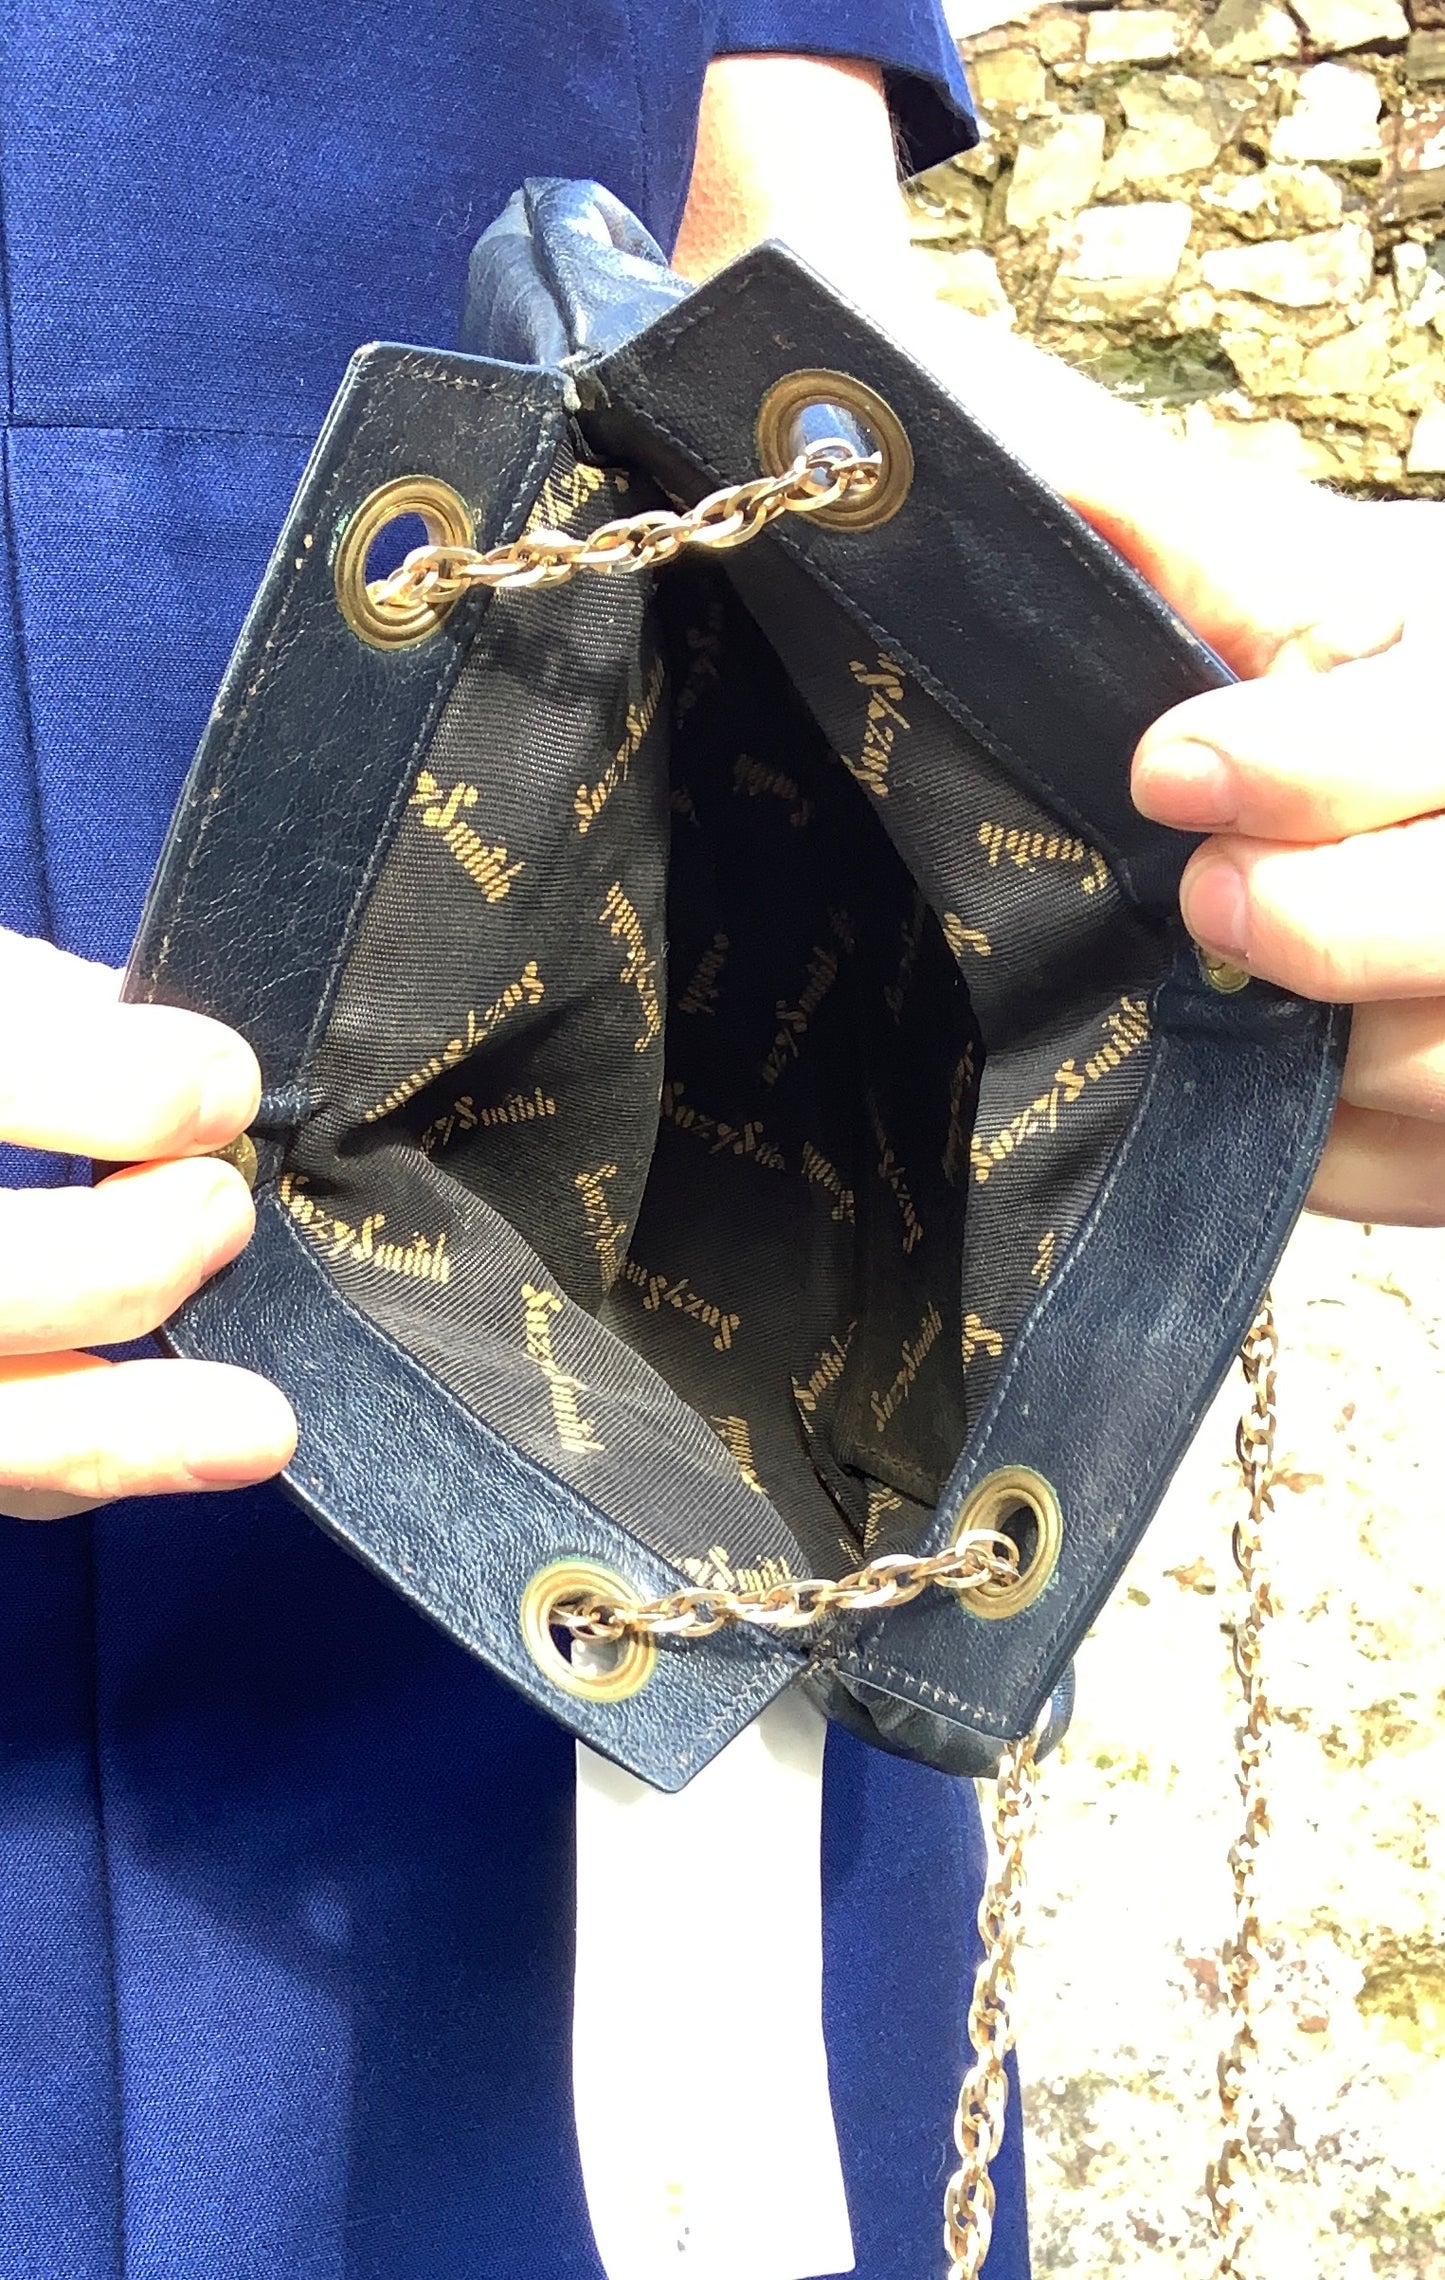 Vintage 1980’s Suzy smith Navy leather handbag